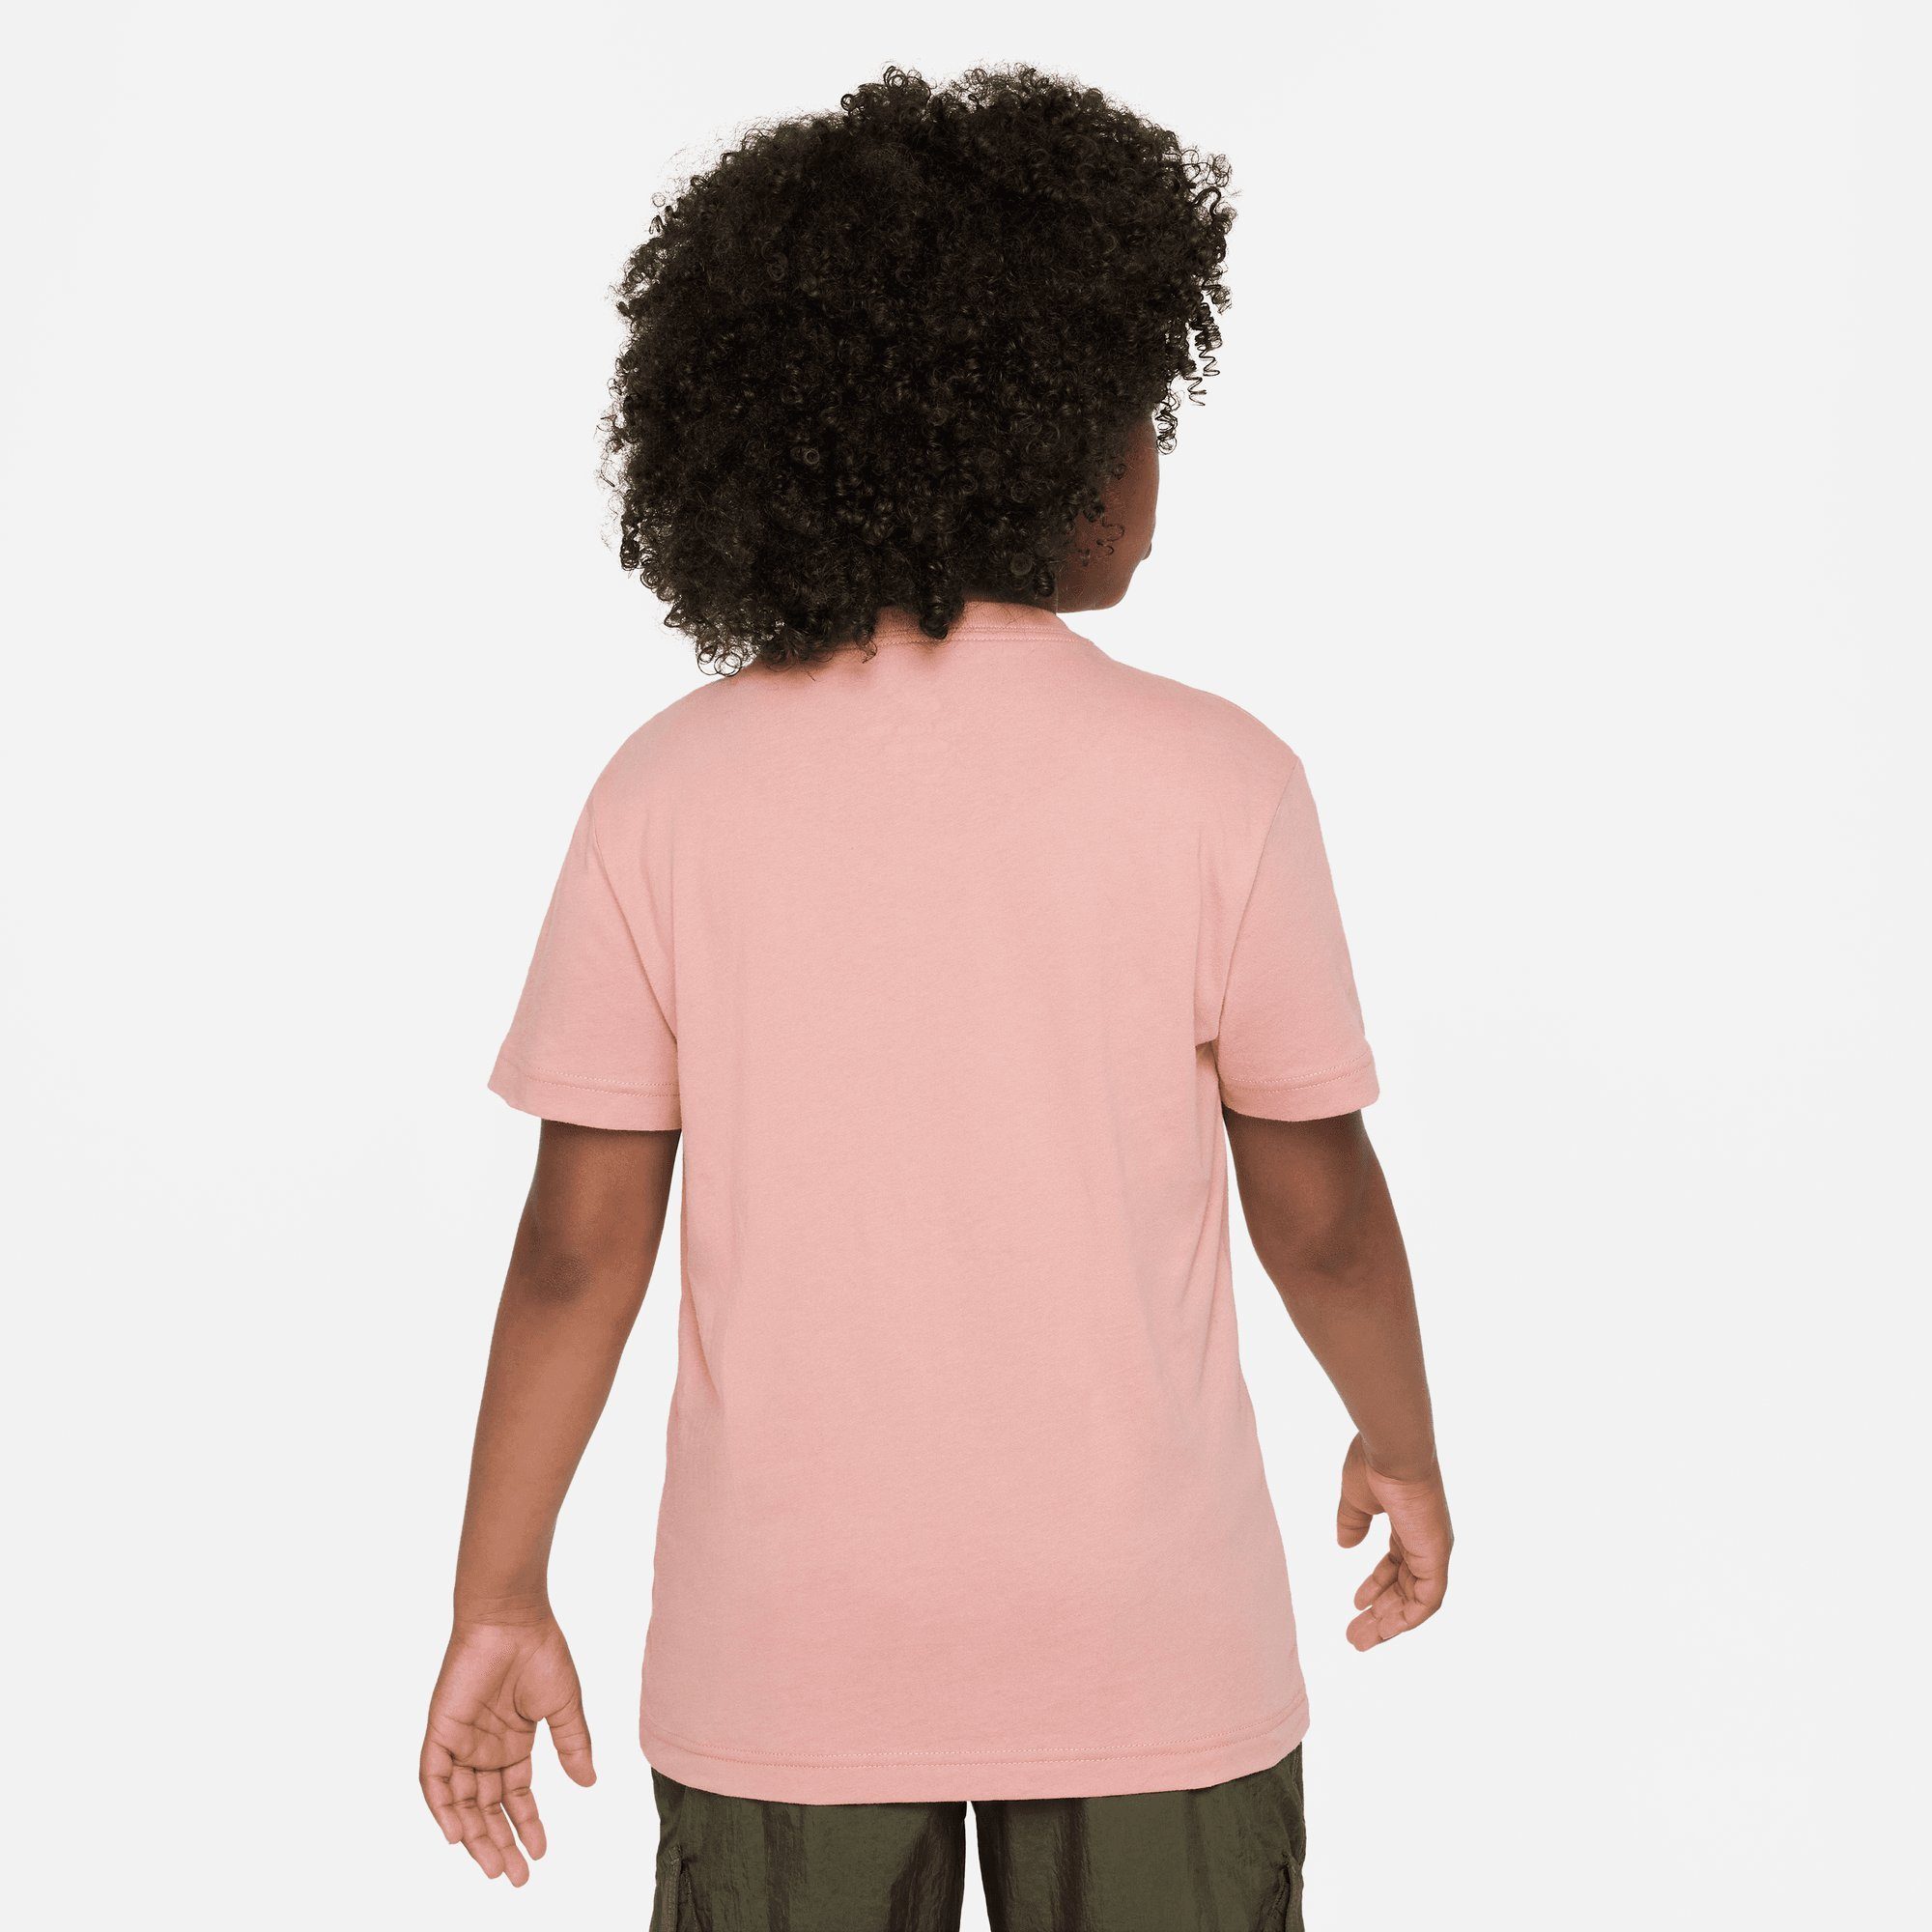 BIG (GIRLS) KIDS' STARDUST Sportswear RED T-SHIRT T-Shirt Nike